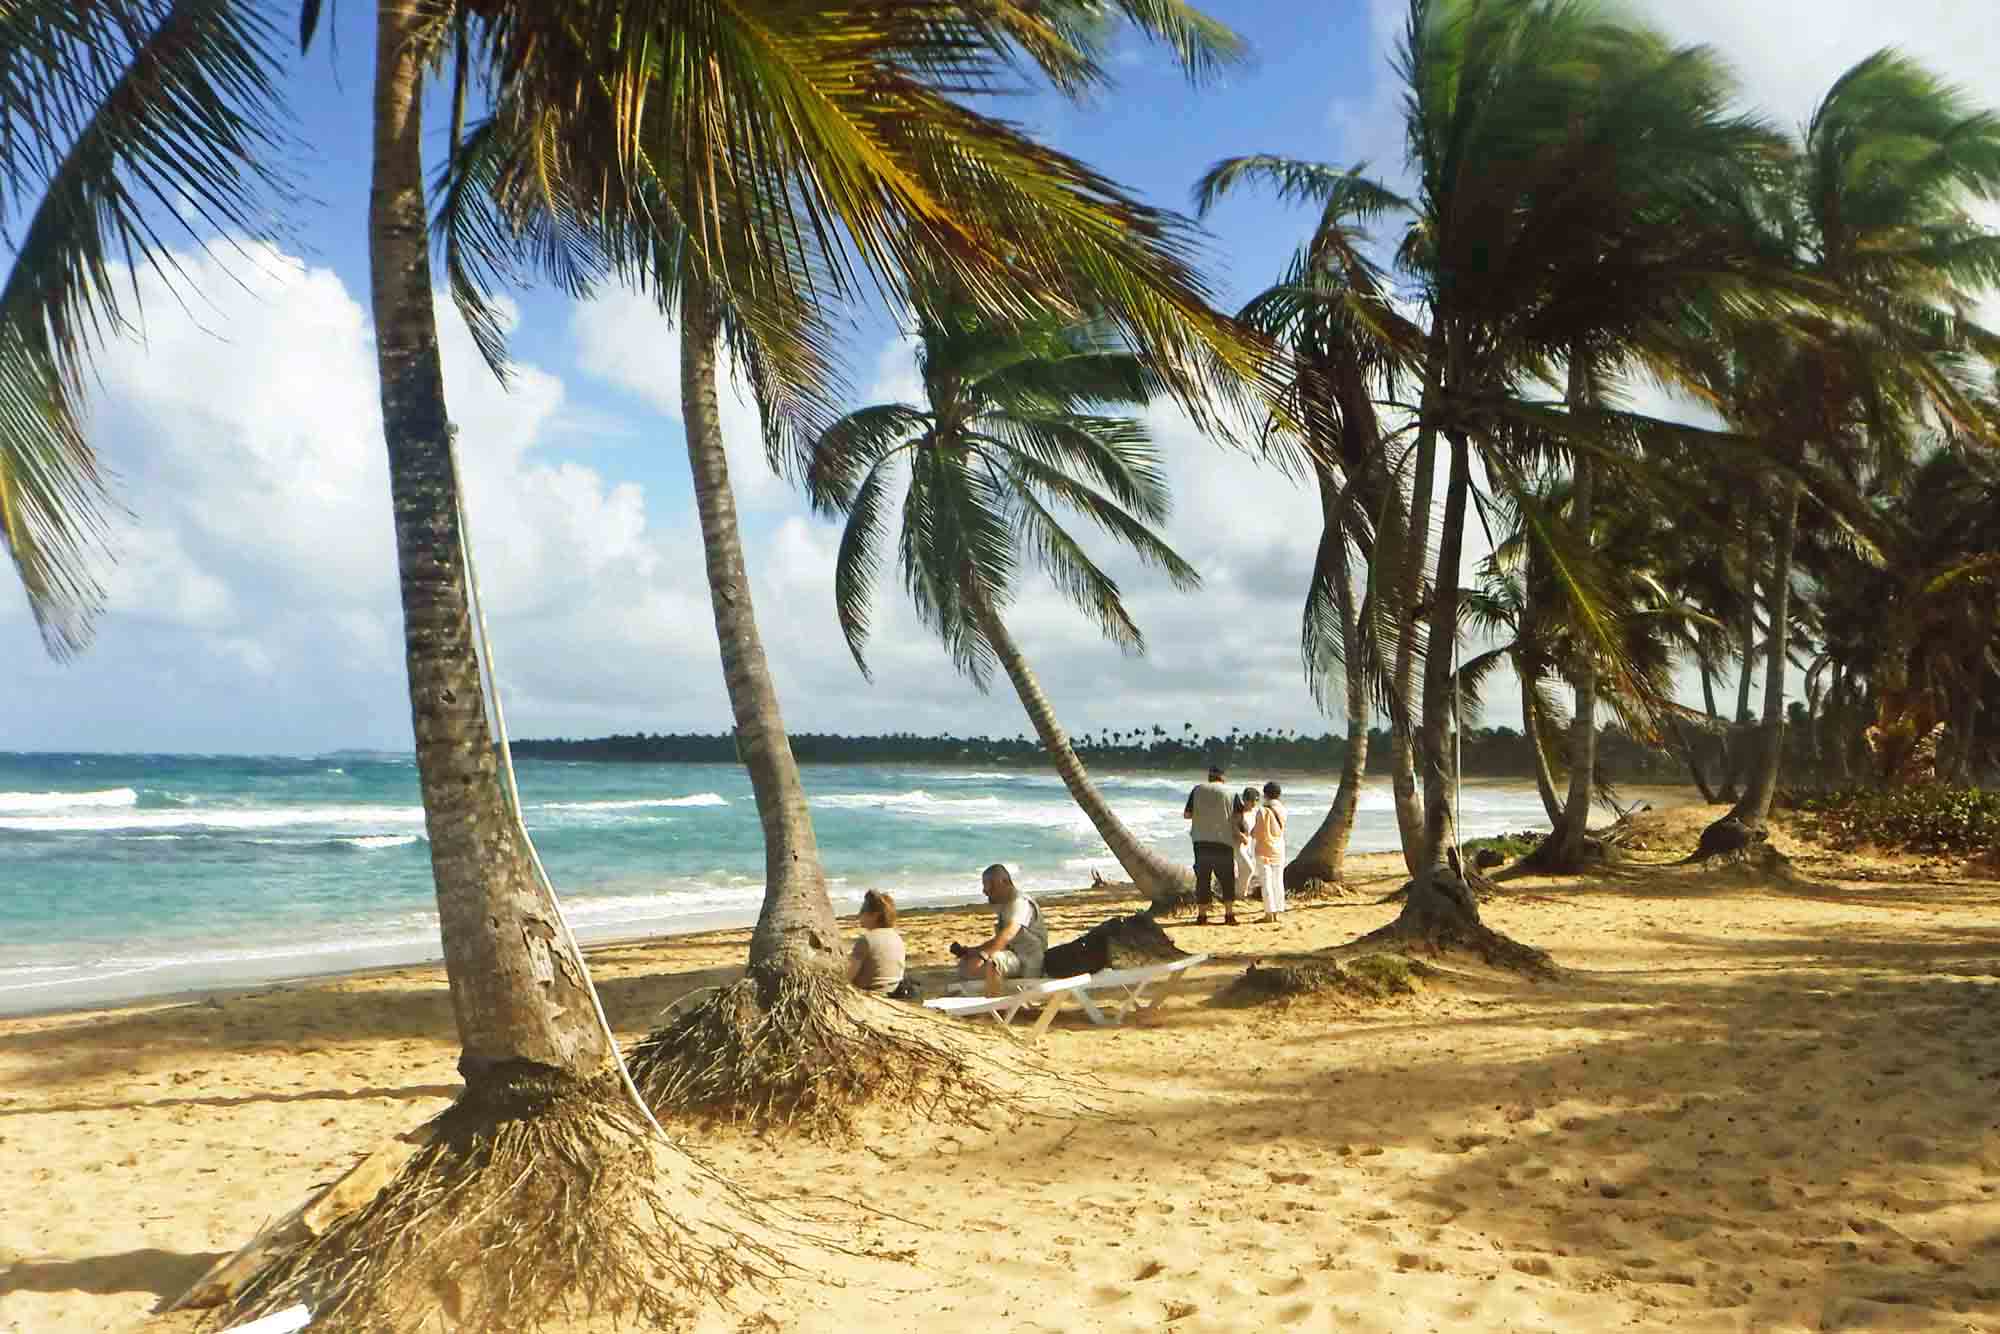 Dominican Republic: Beach near Punta Cana